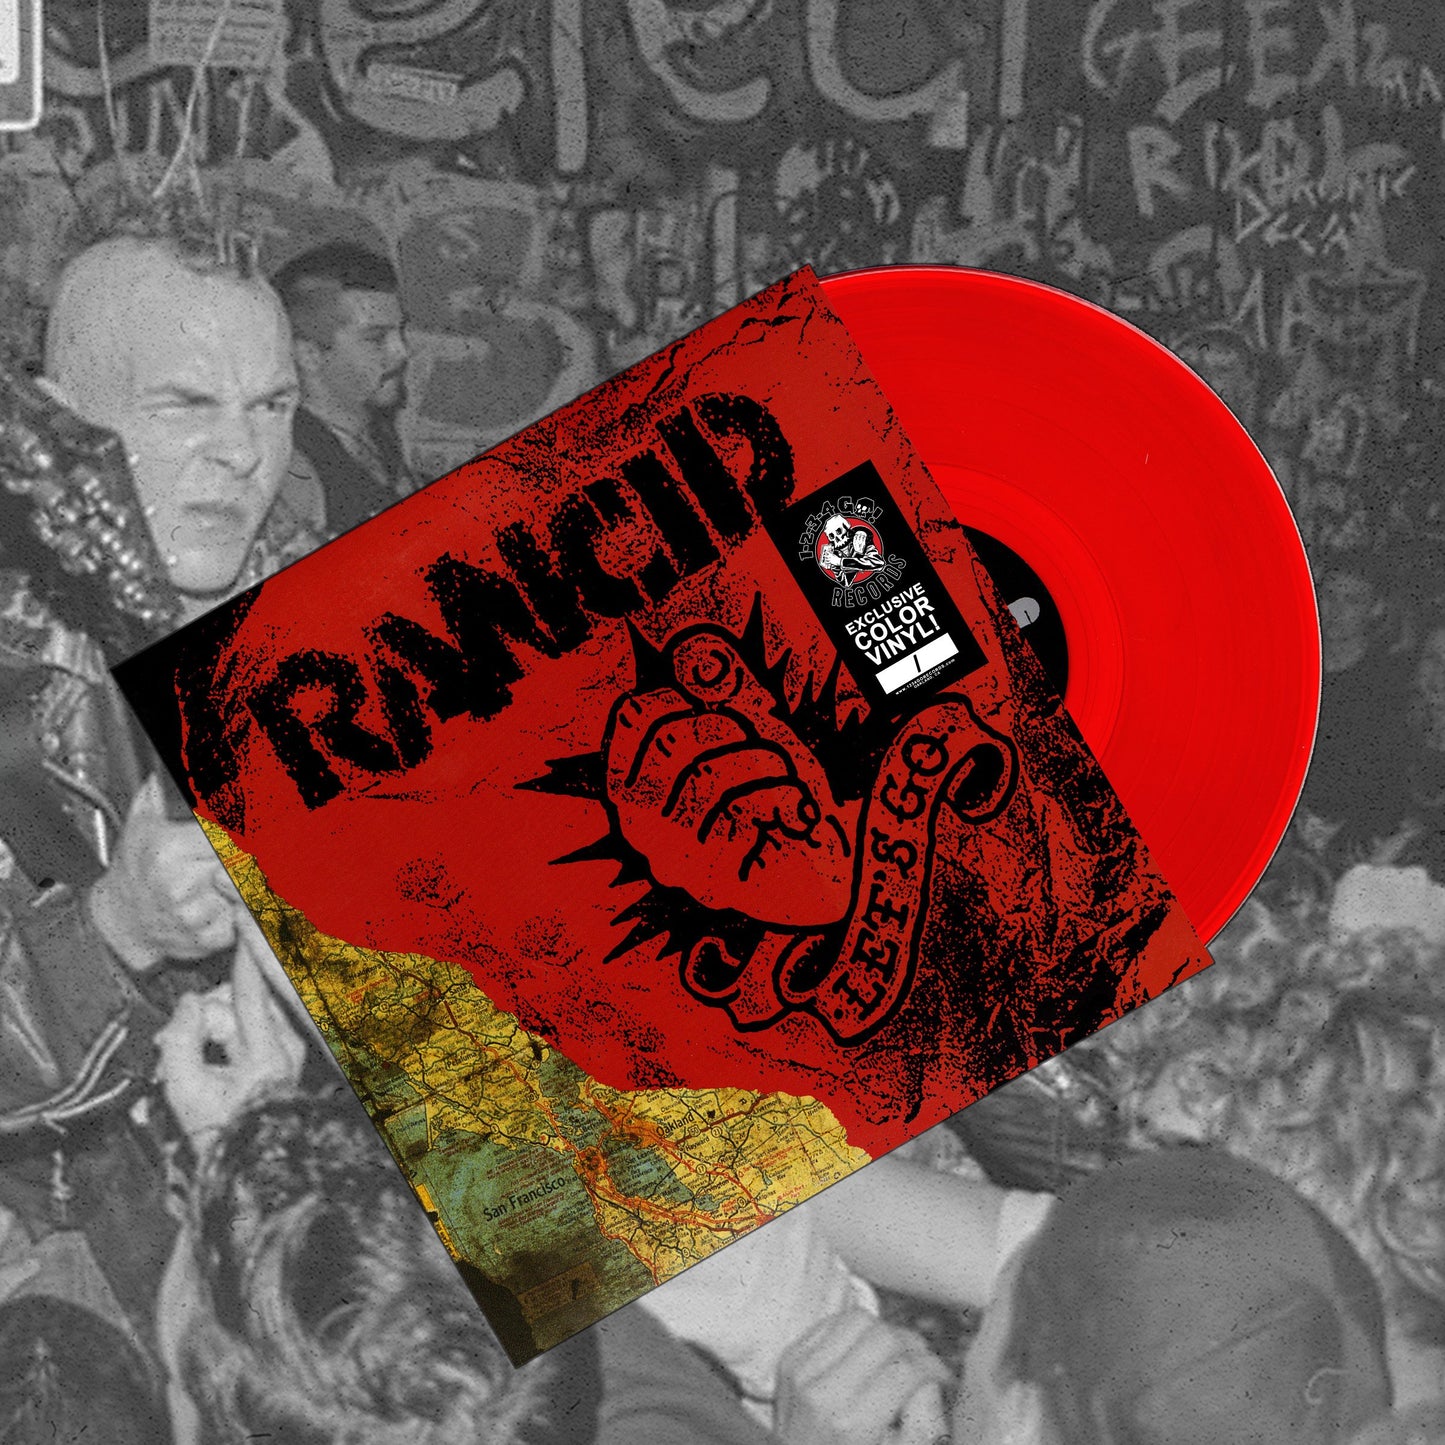 Rancid "Let's Go" LP (1-2-3-4 Go! Exclusive RED VINYL)